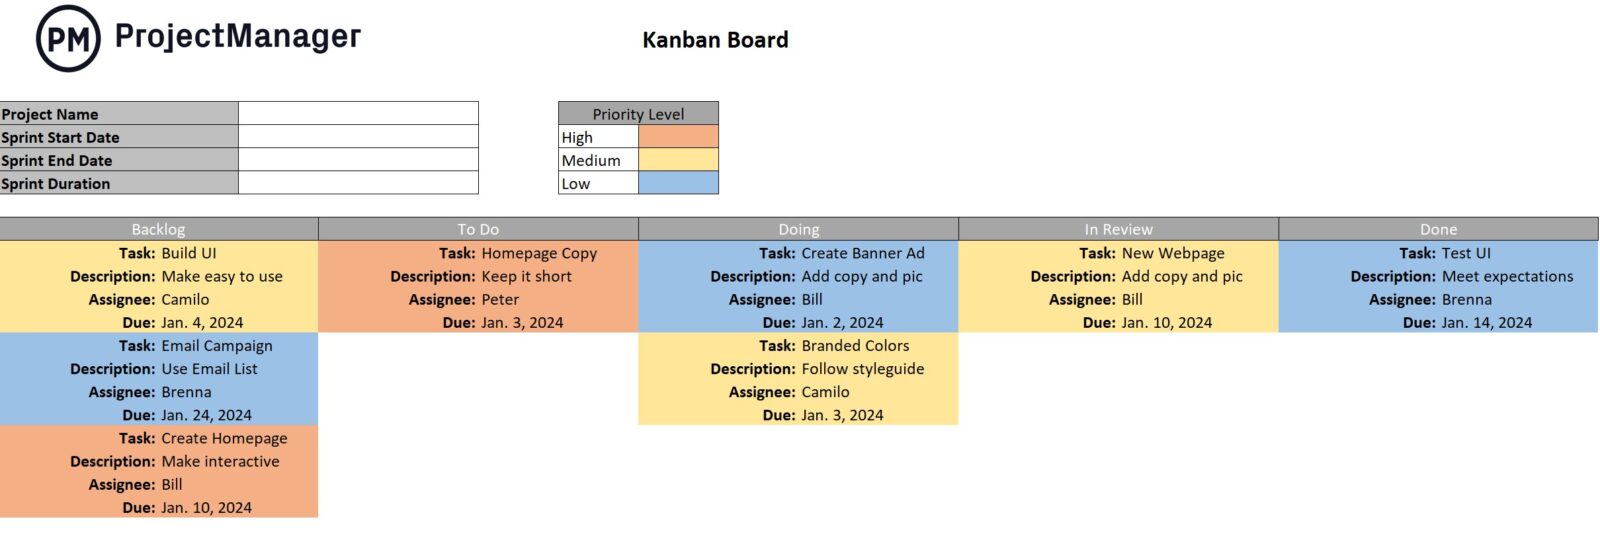 kanban board template